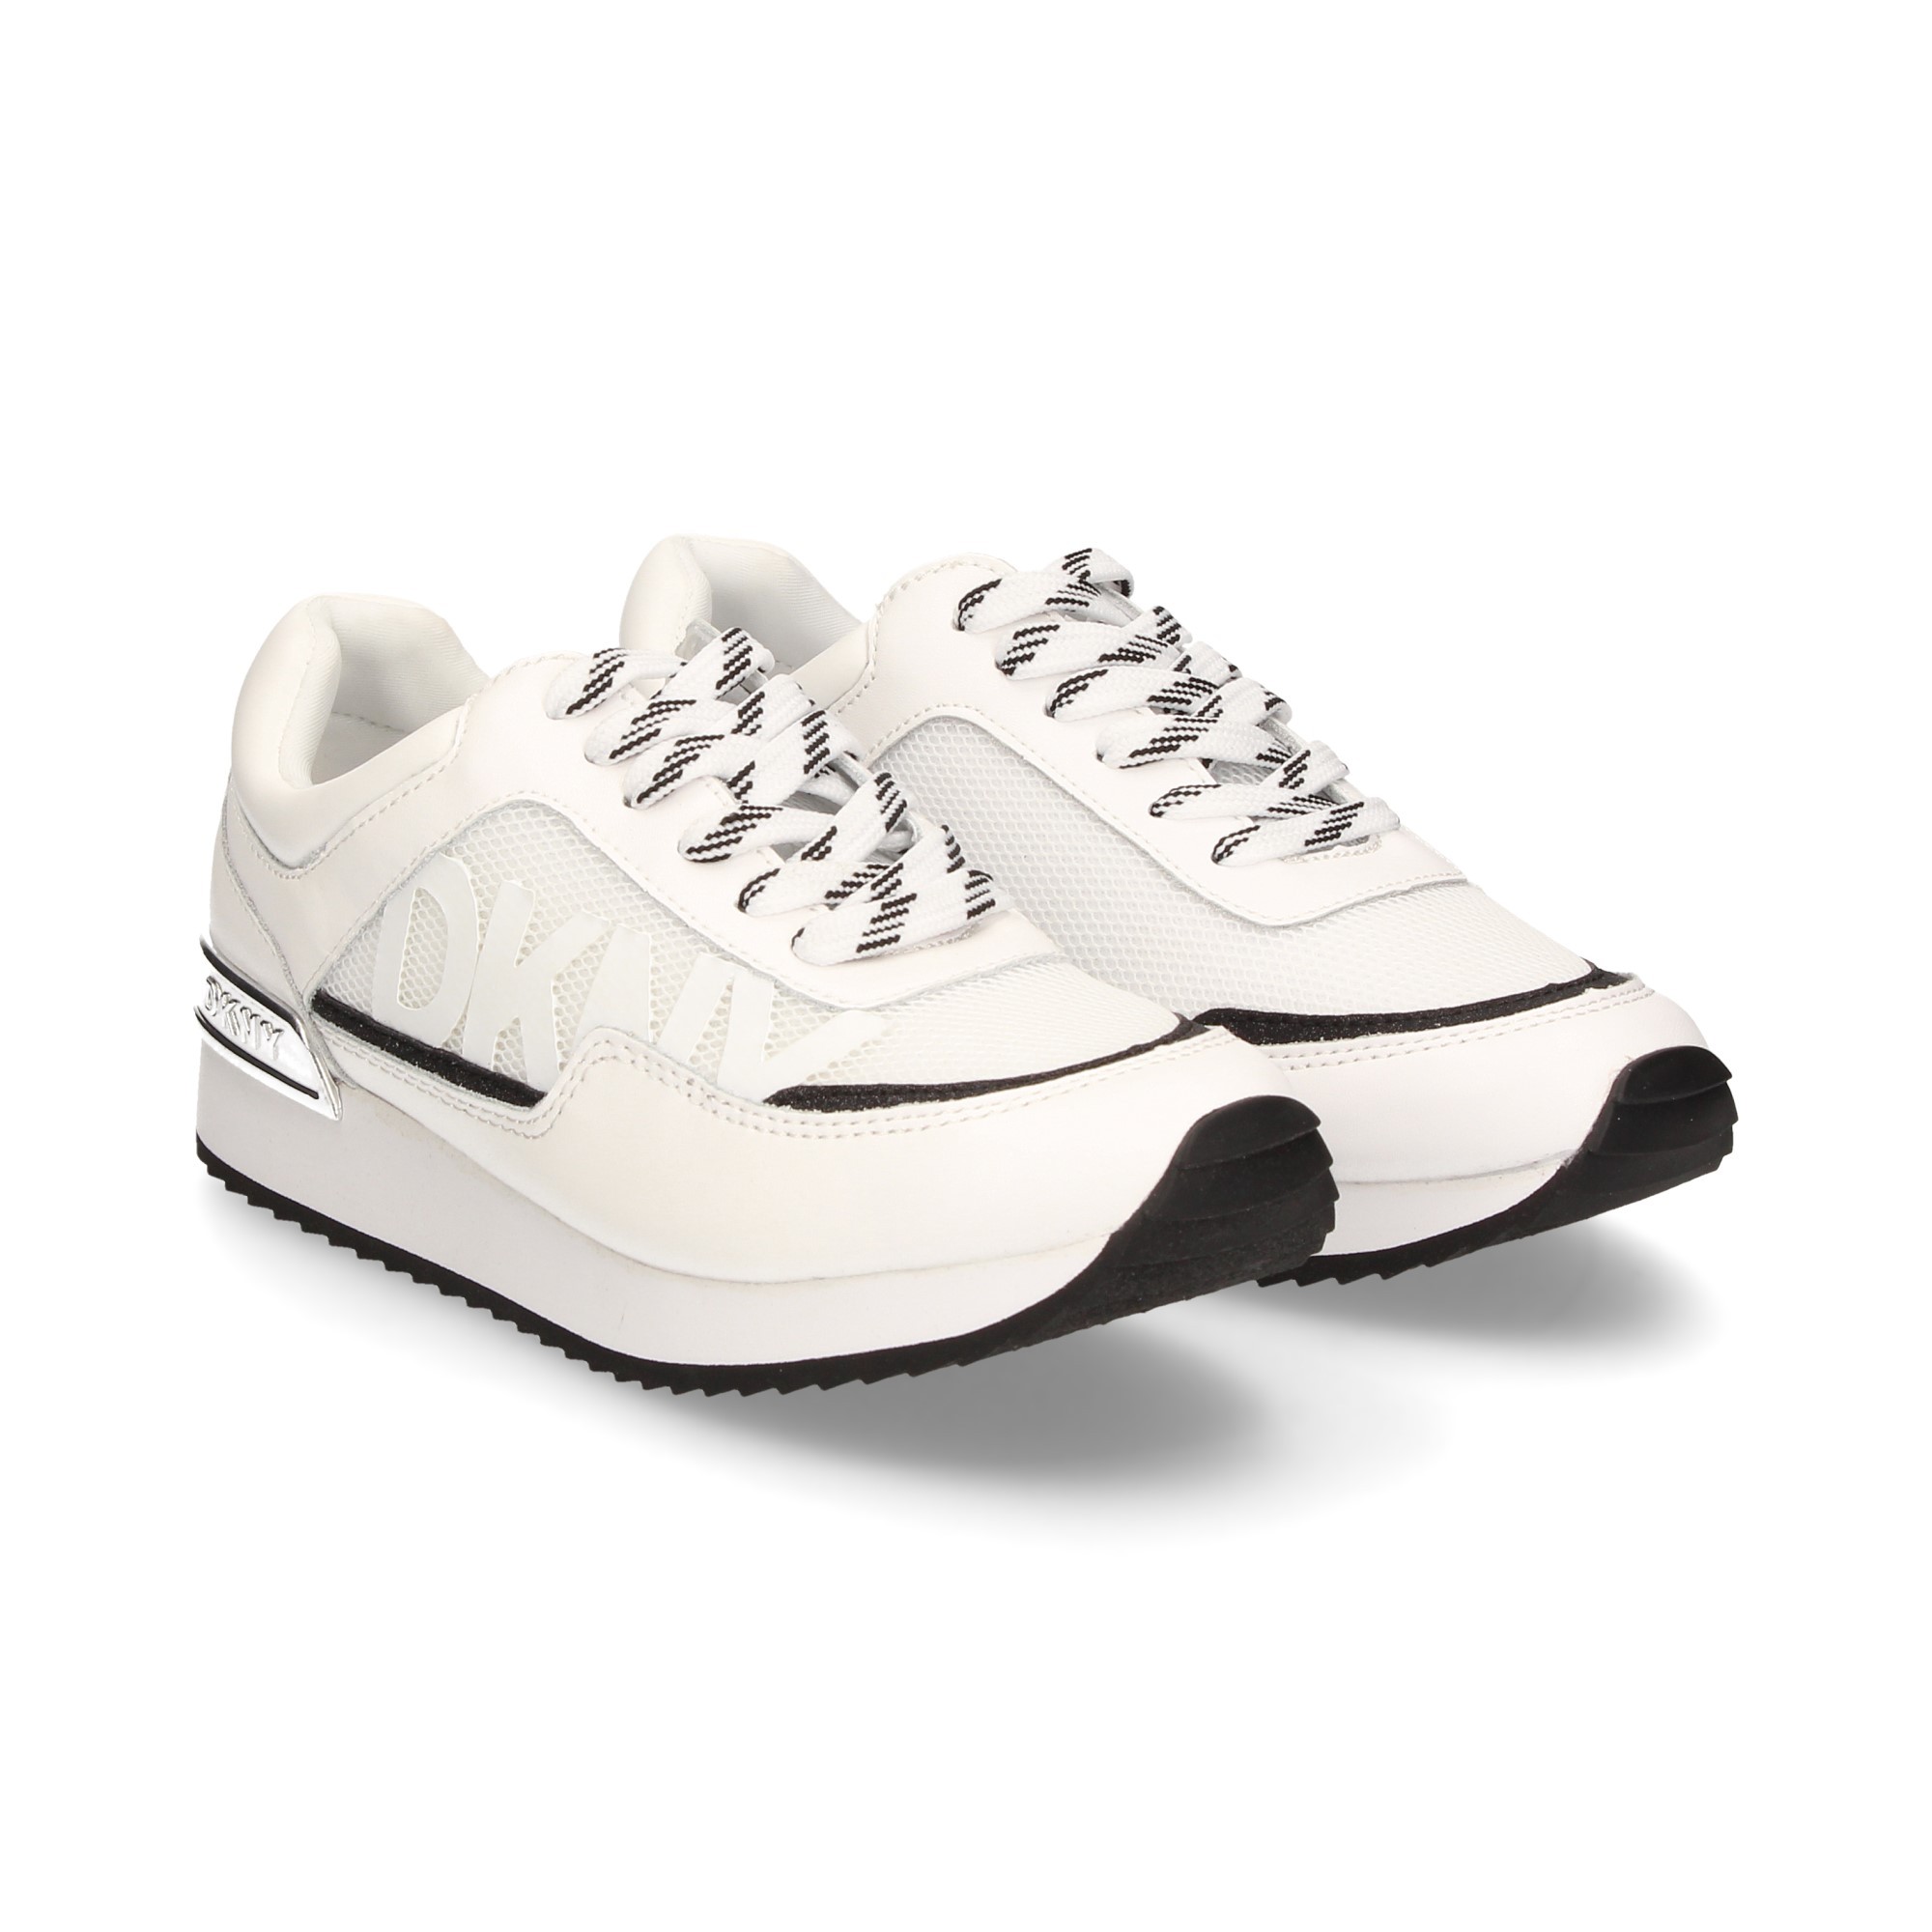 DKNY Women's Abbi Slip On Sneaker, Black White, 3.5 UK: Amazon.co.uk:  Fashion